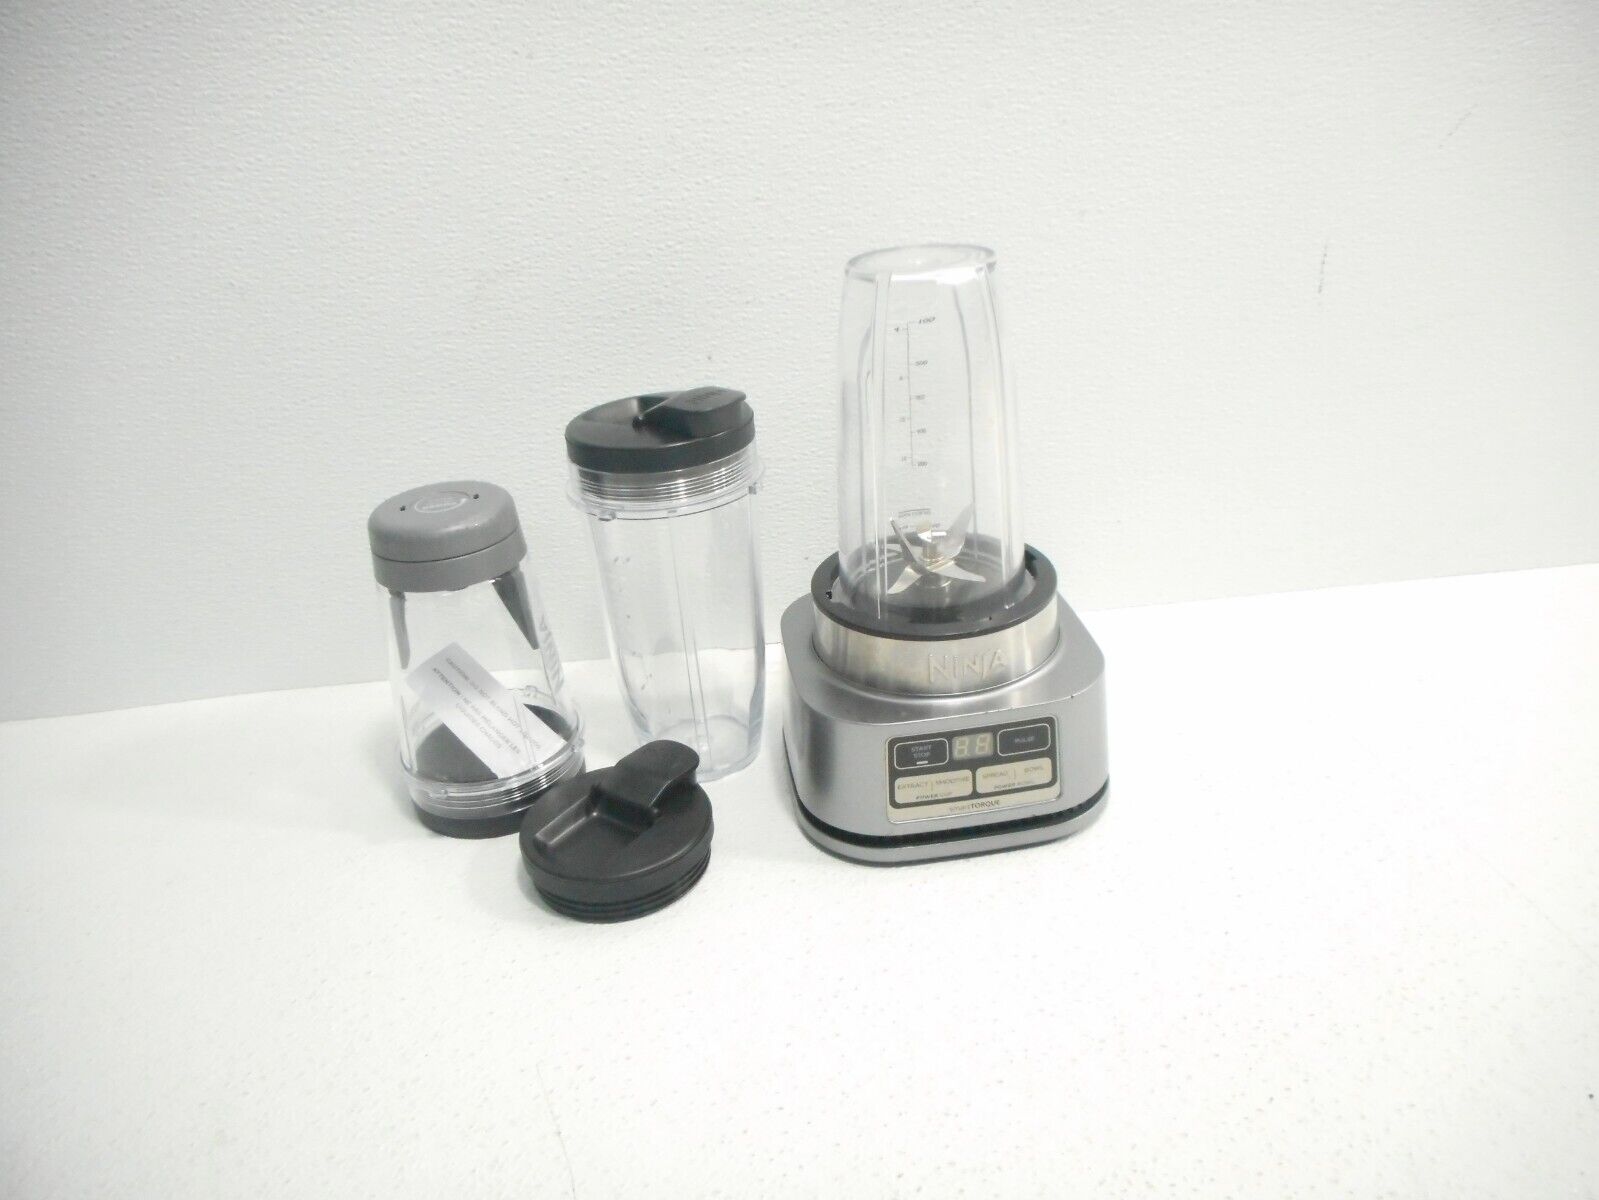 Ninja SS101 Foodi Power Nutri Duo Bowl Maker and Personal Blender - Silver  -USED